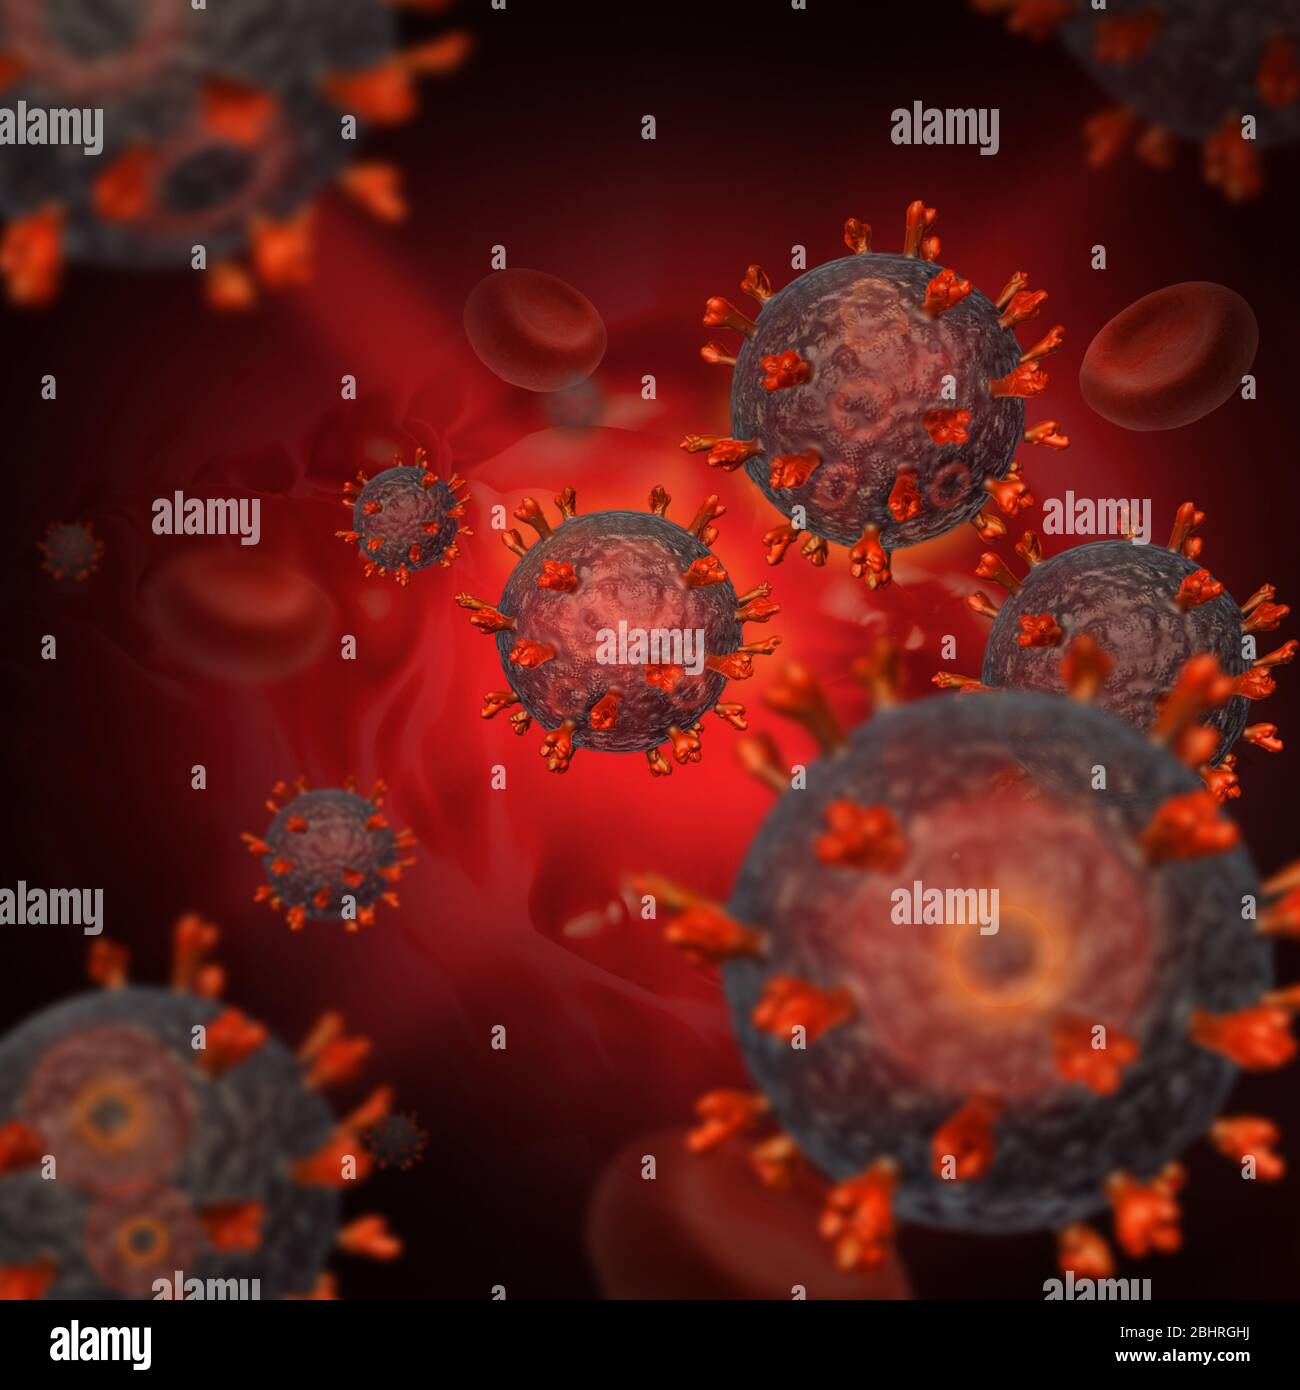 Coronavirus concept responsible for asian flu outbreak and coronaviruses influenza as dangerous flu strain cases as a pandemic. Stock Photo